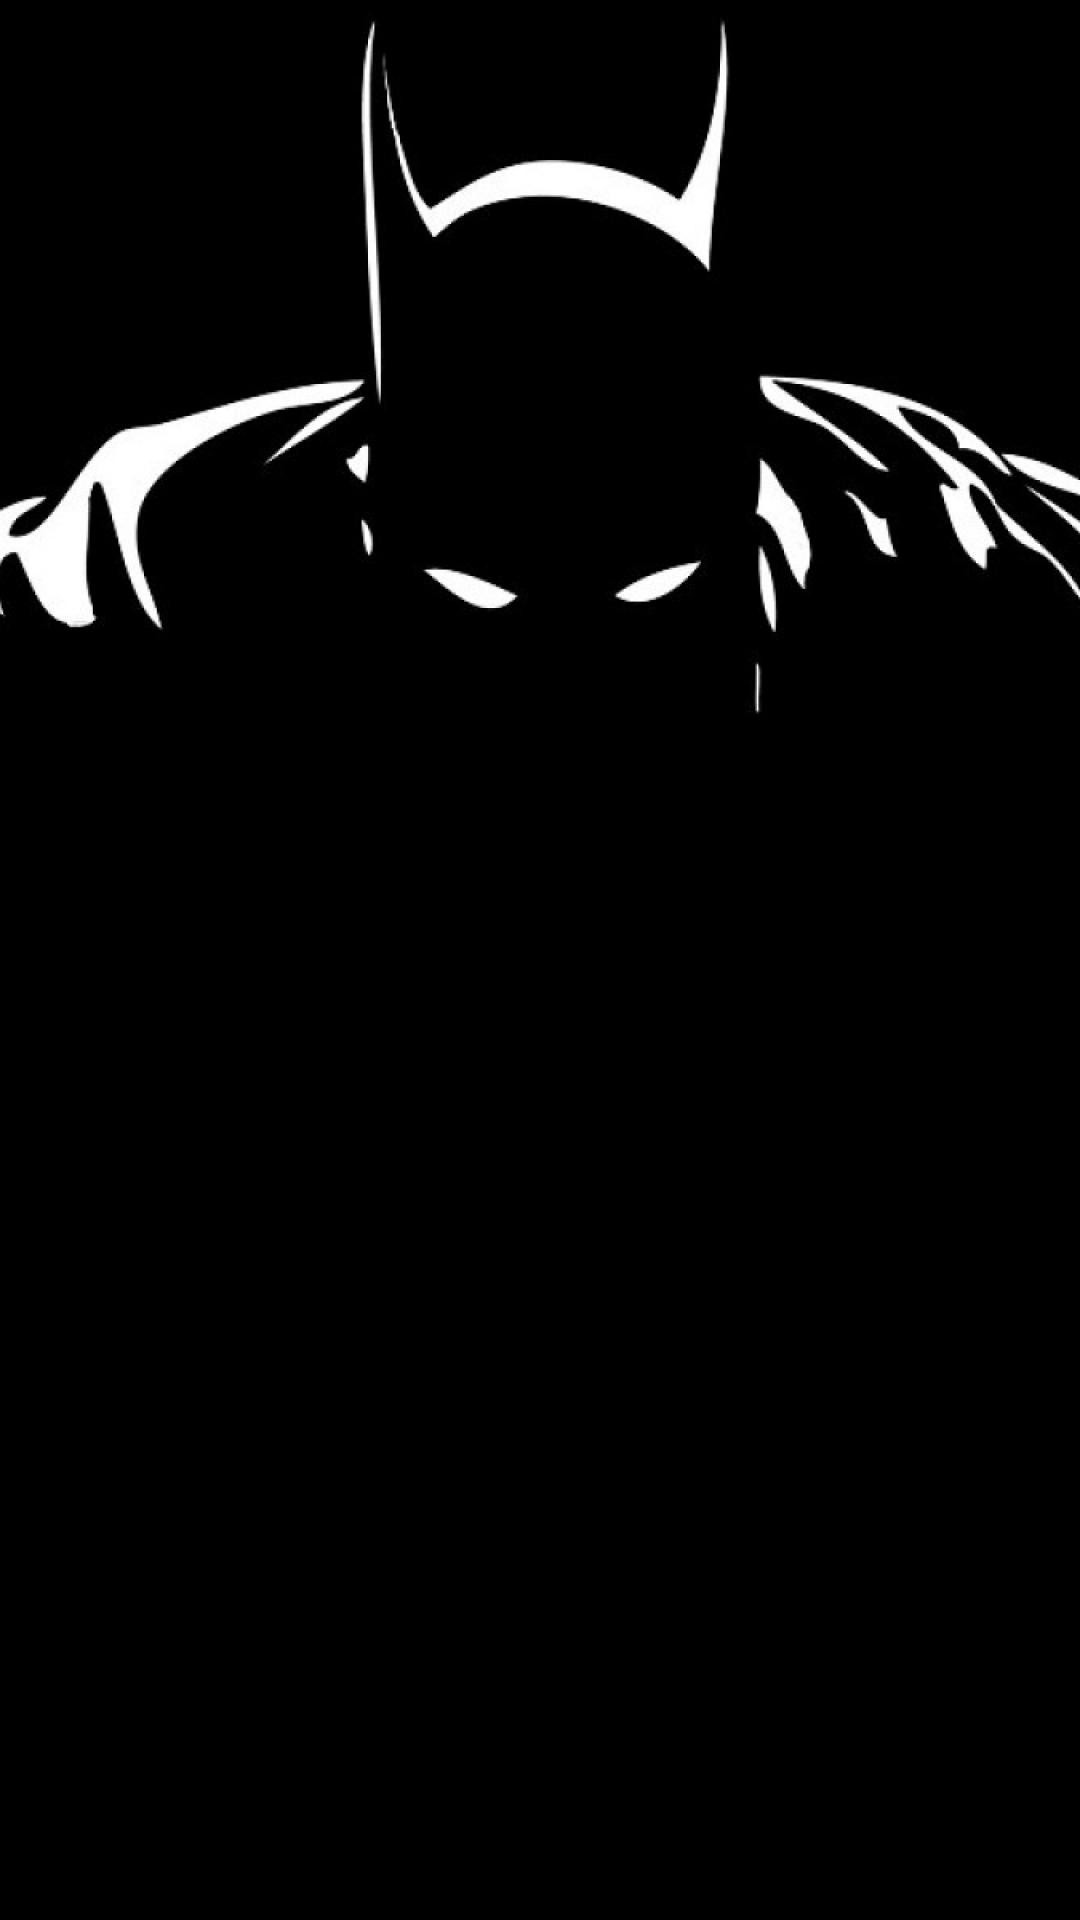 1080x1920 Batman black and white black iphone wallpaper.